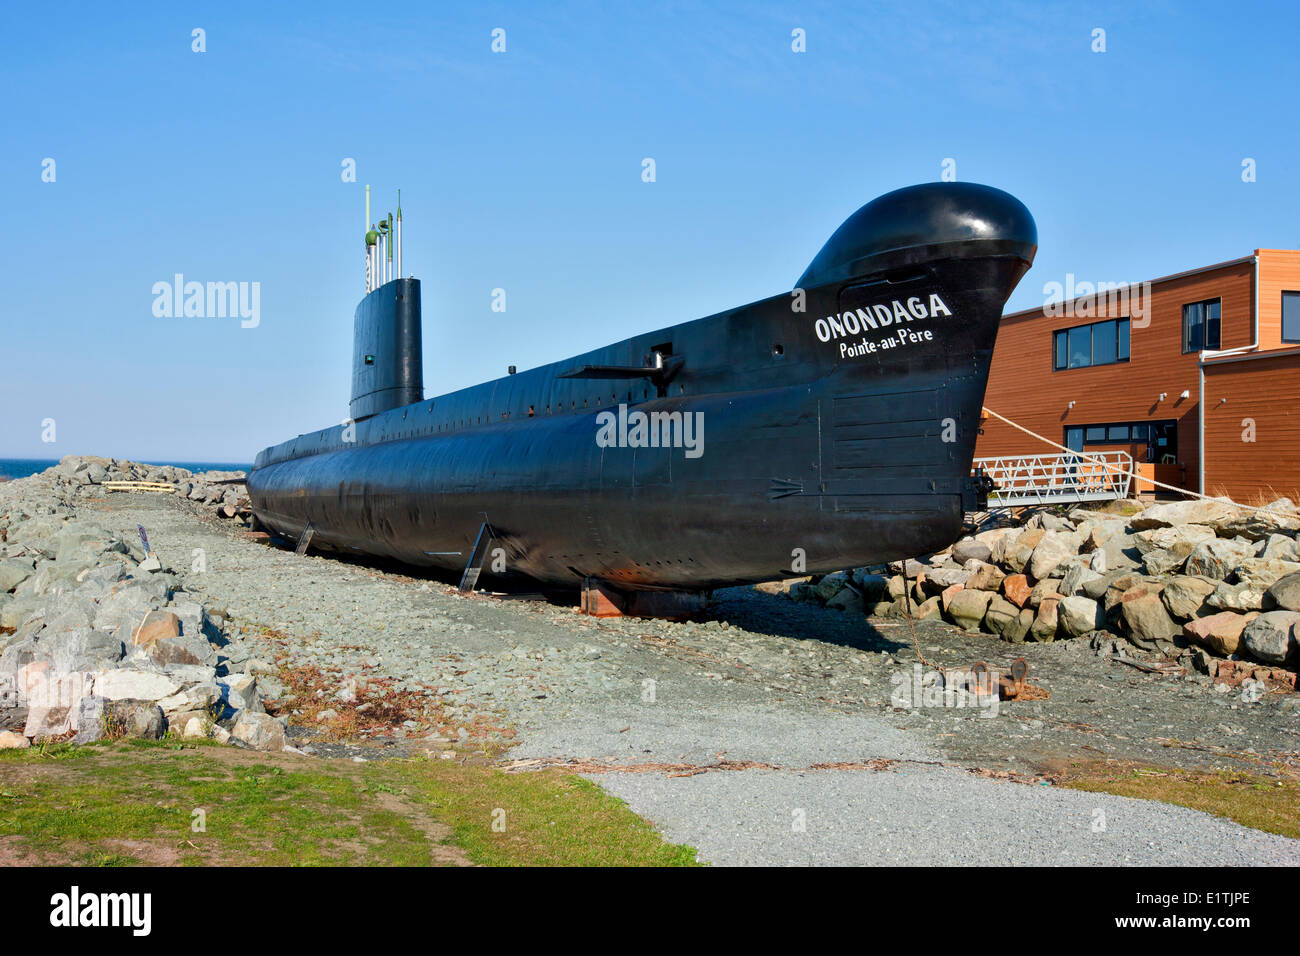 Onondaga sottomarino, Pointe-au-Père marittimo sito storico, Quebec, Canada Foto Stock